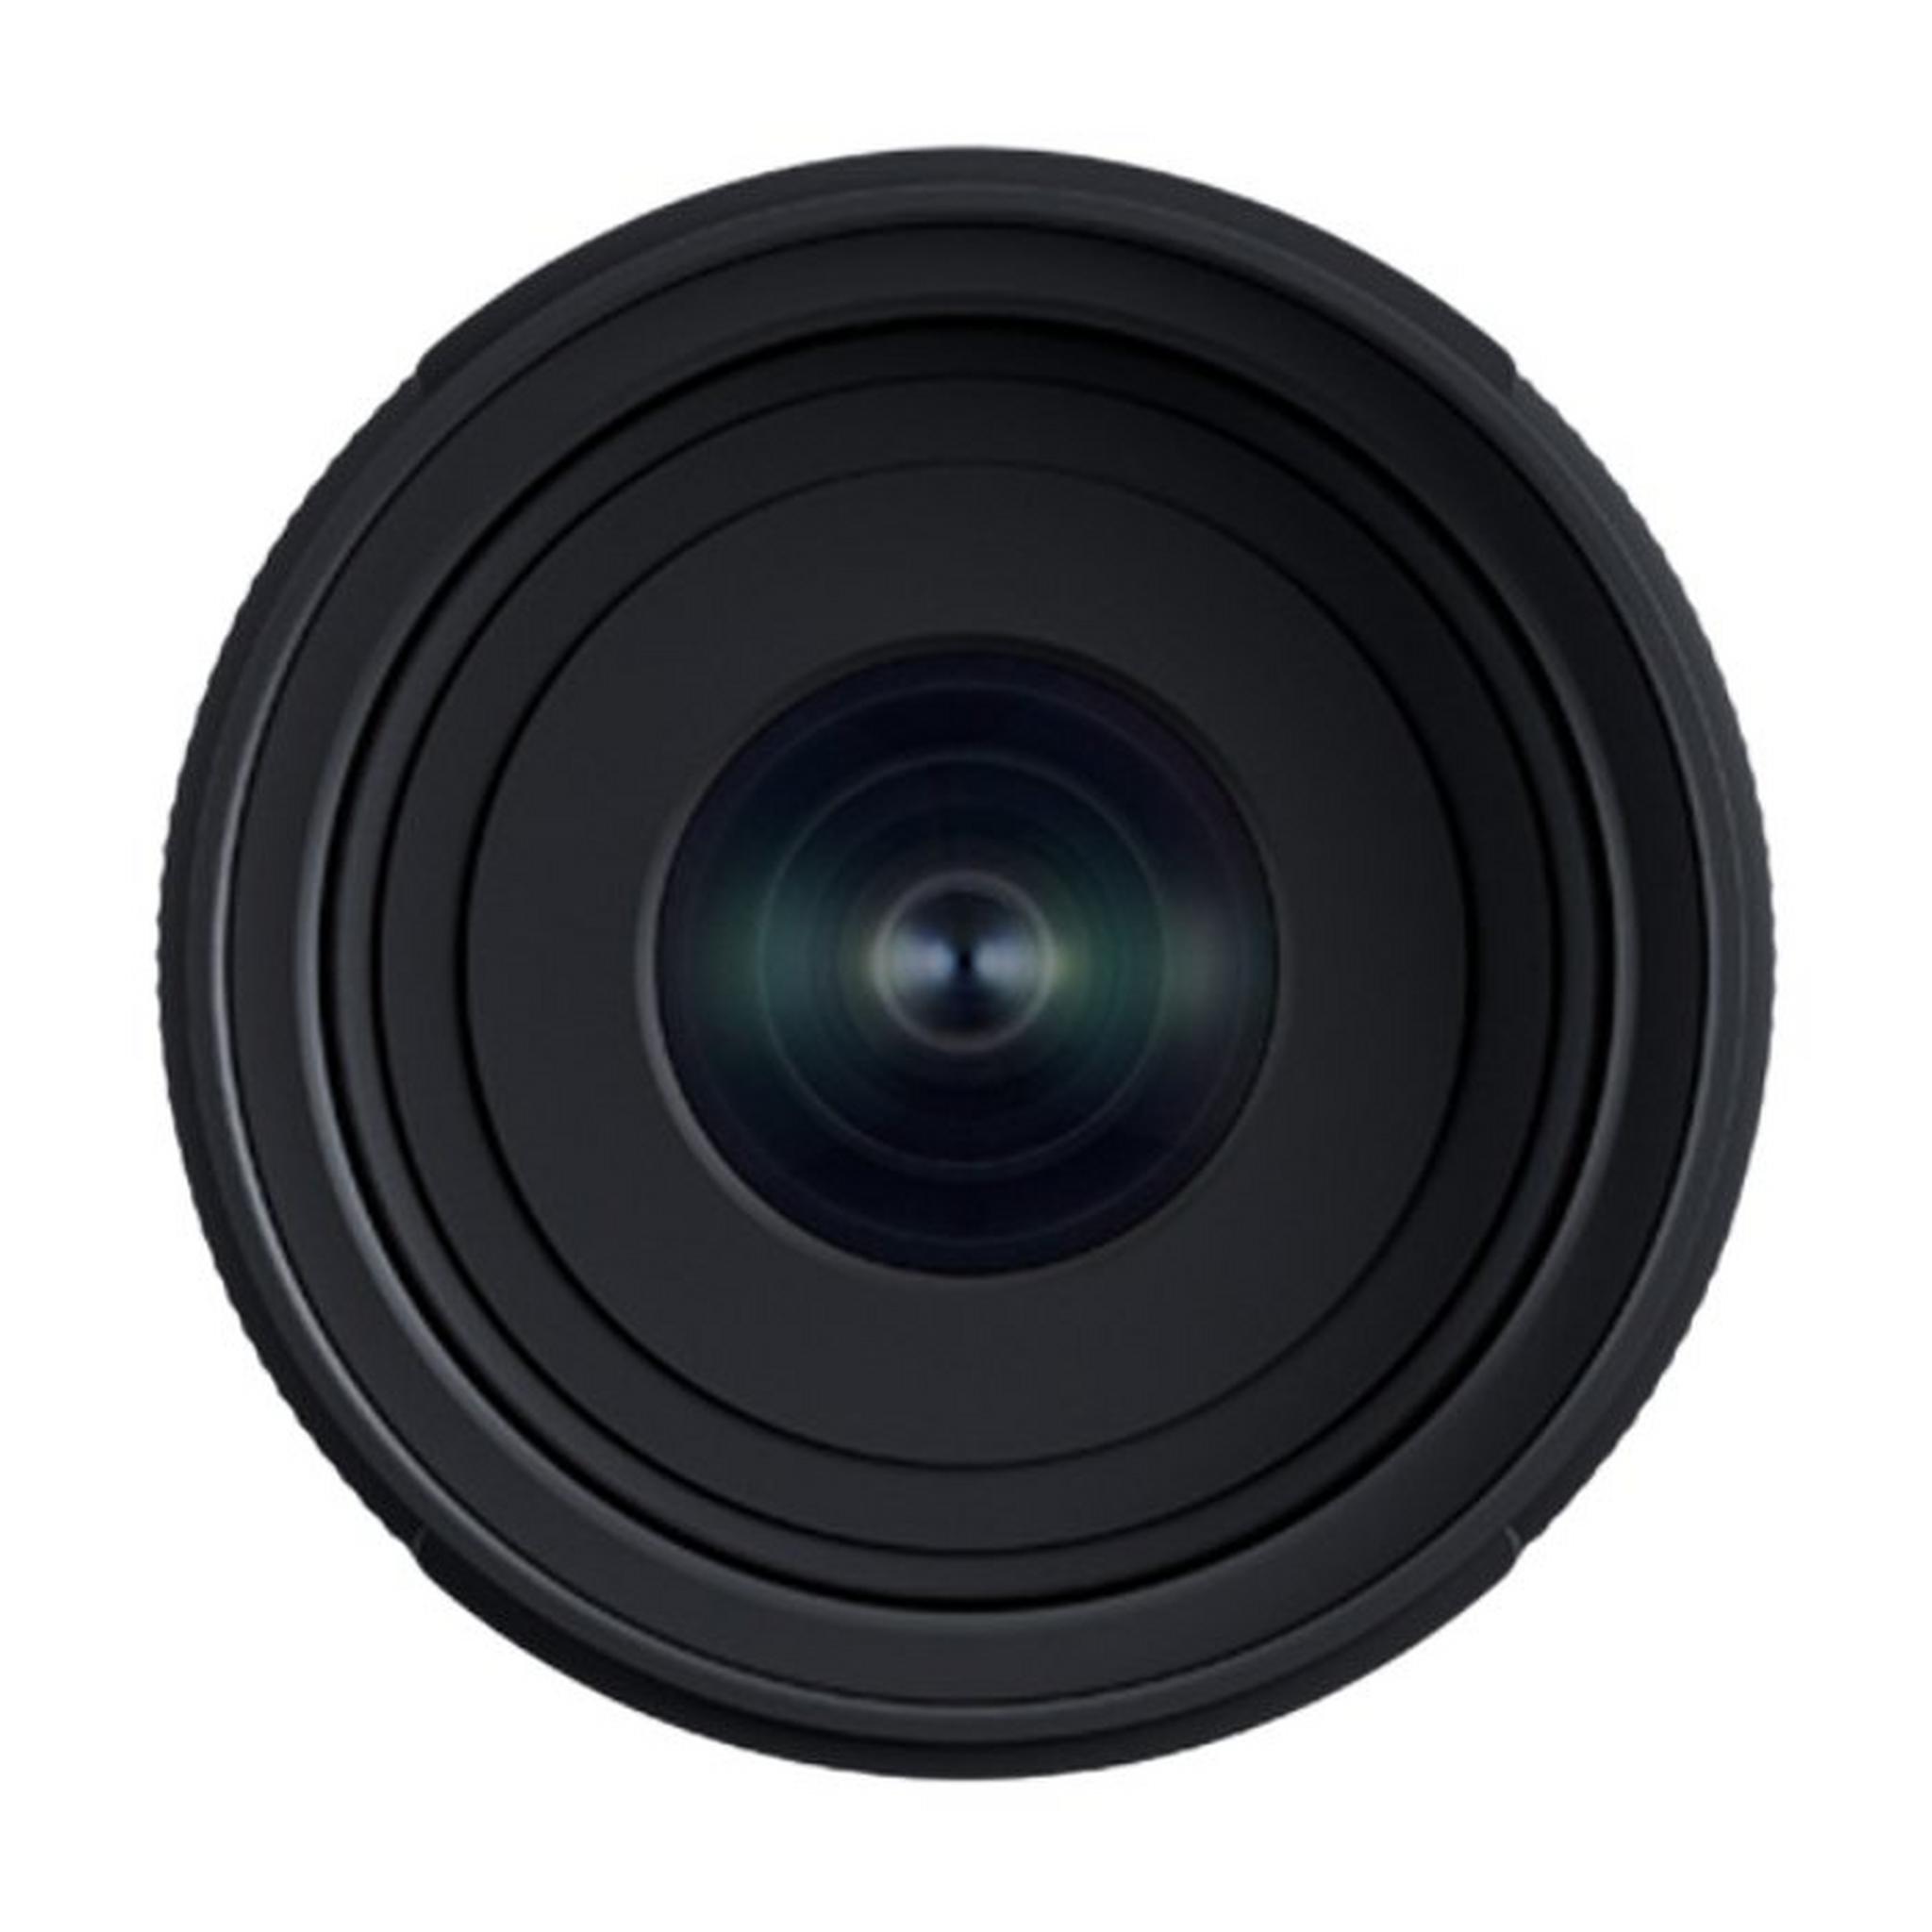 Tamron 20mm f/2.8 Di III OSD M 1:2 Sony E Lens